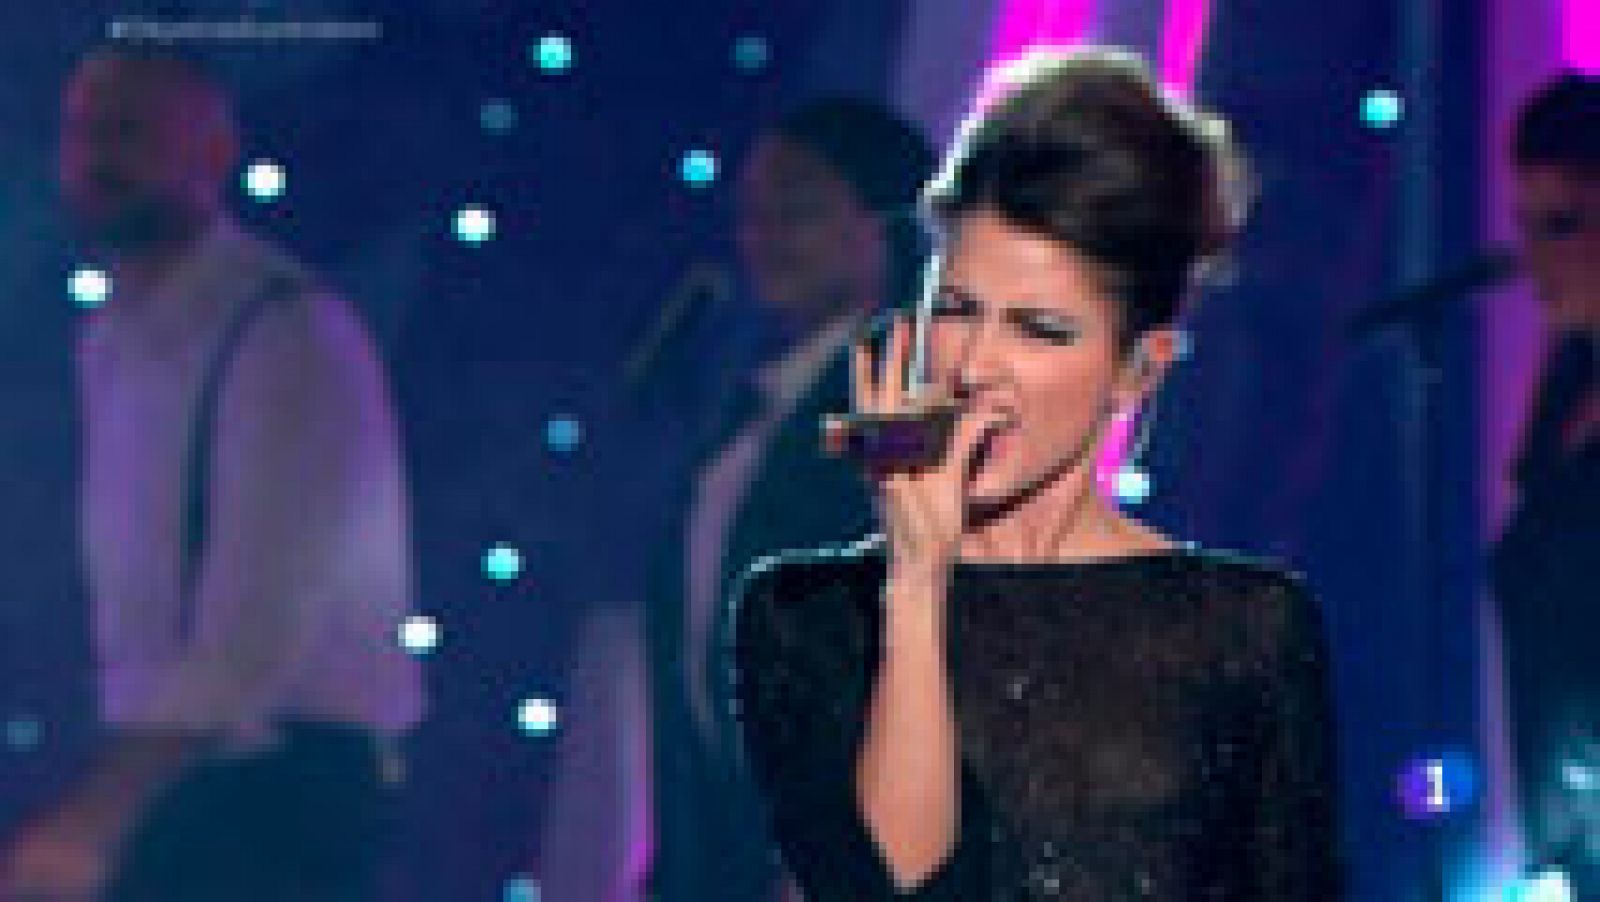 Manuelesky on X: Objetivo Eurovisión 2016 P.1